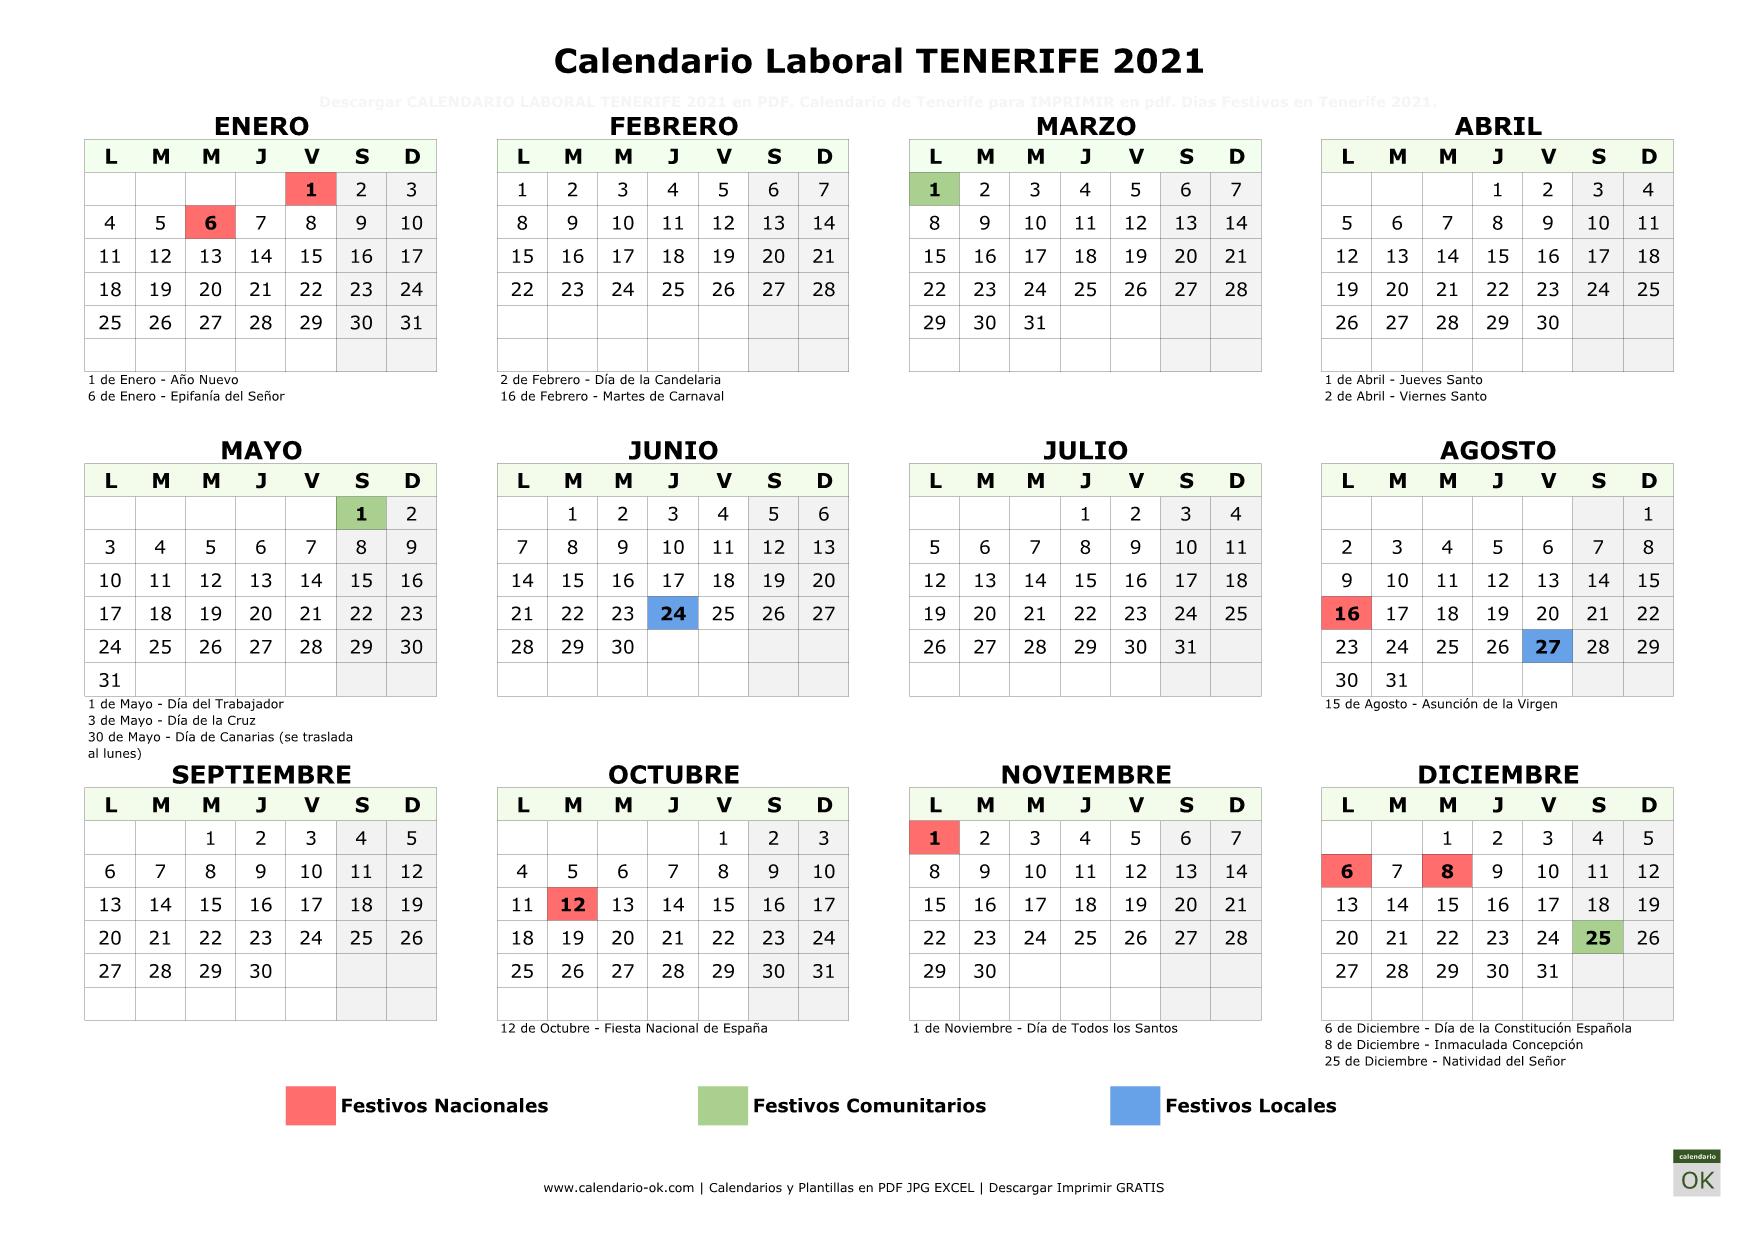 Calendario Laboral Tenerife 2021 horizontal